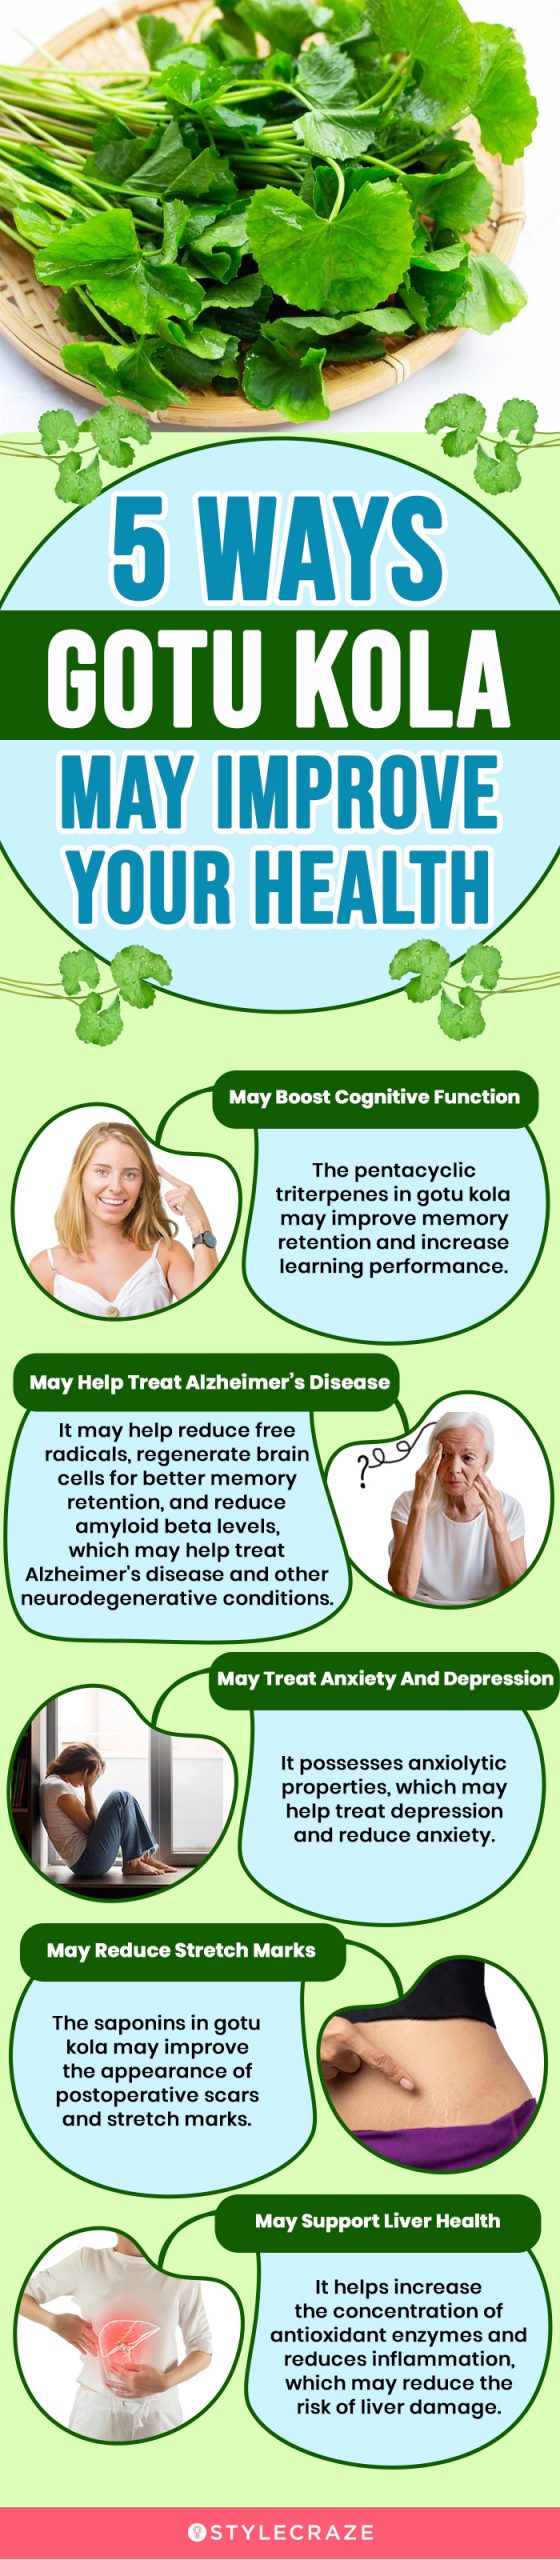 5 ways gotu kola may improve your health (infographic)